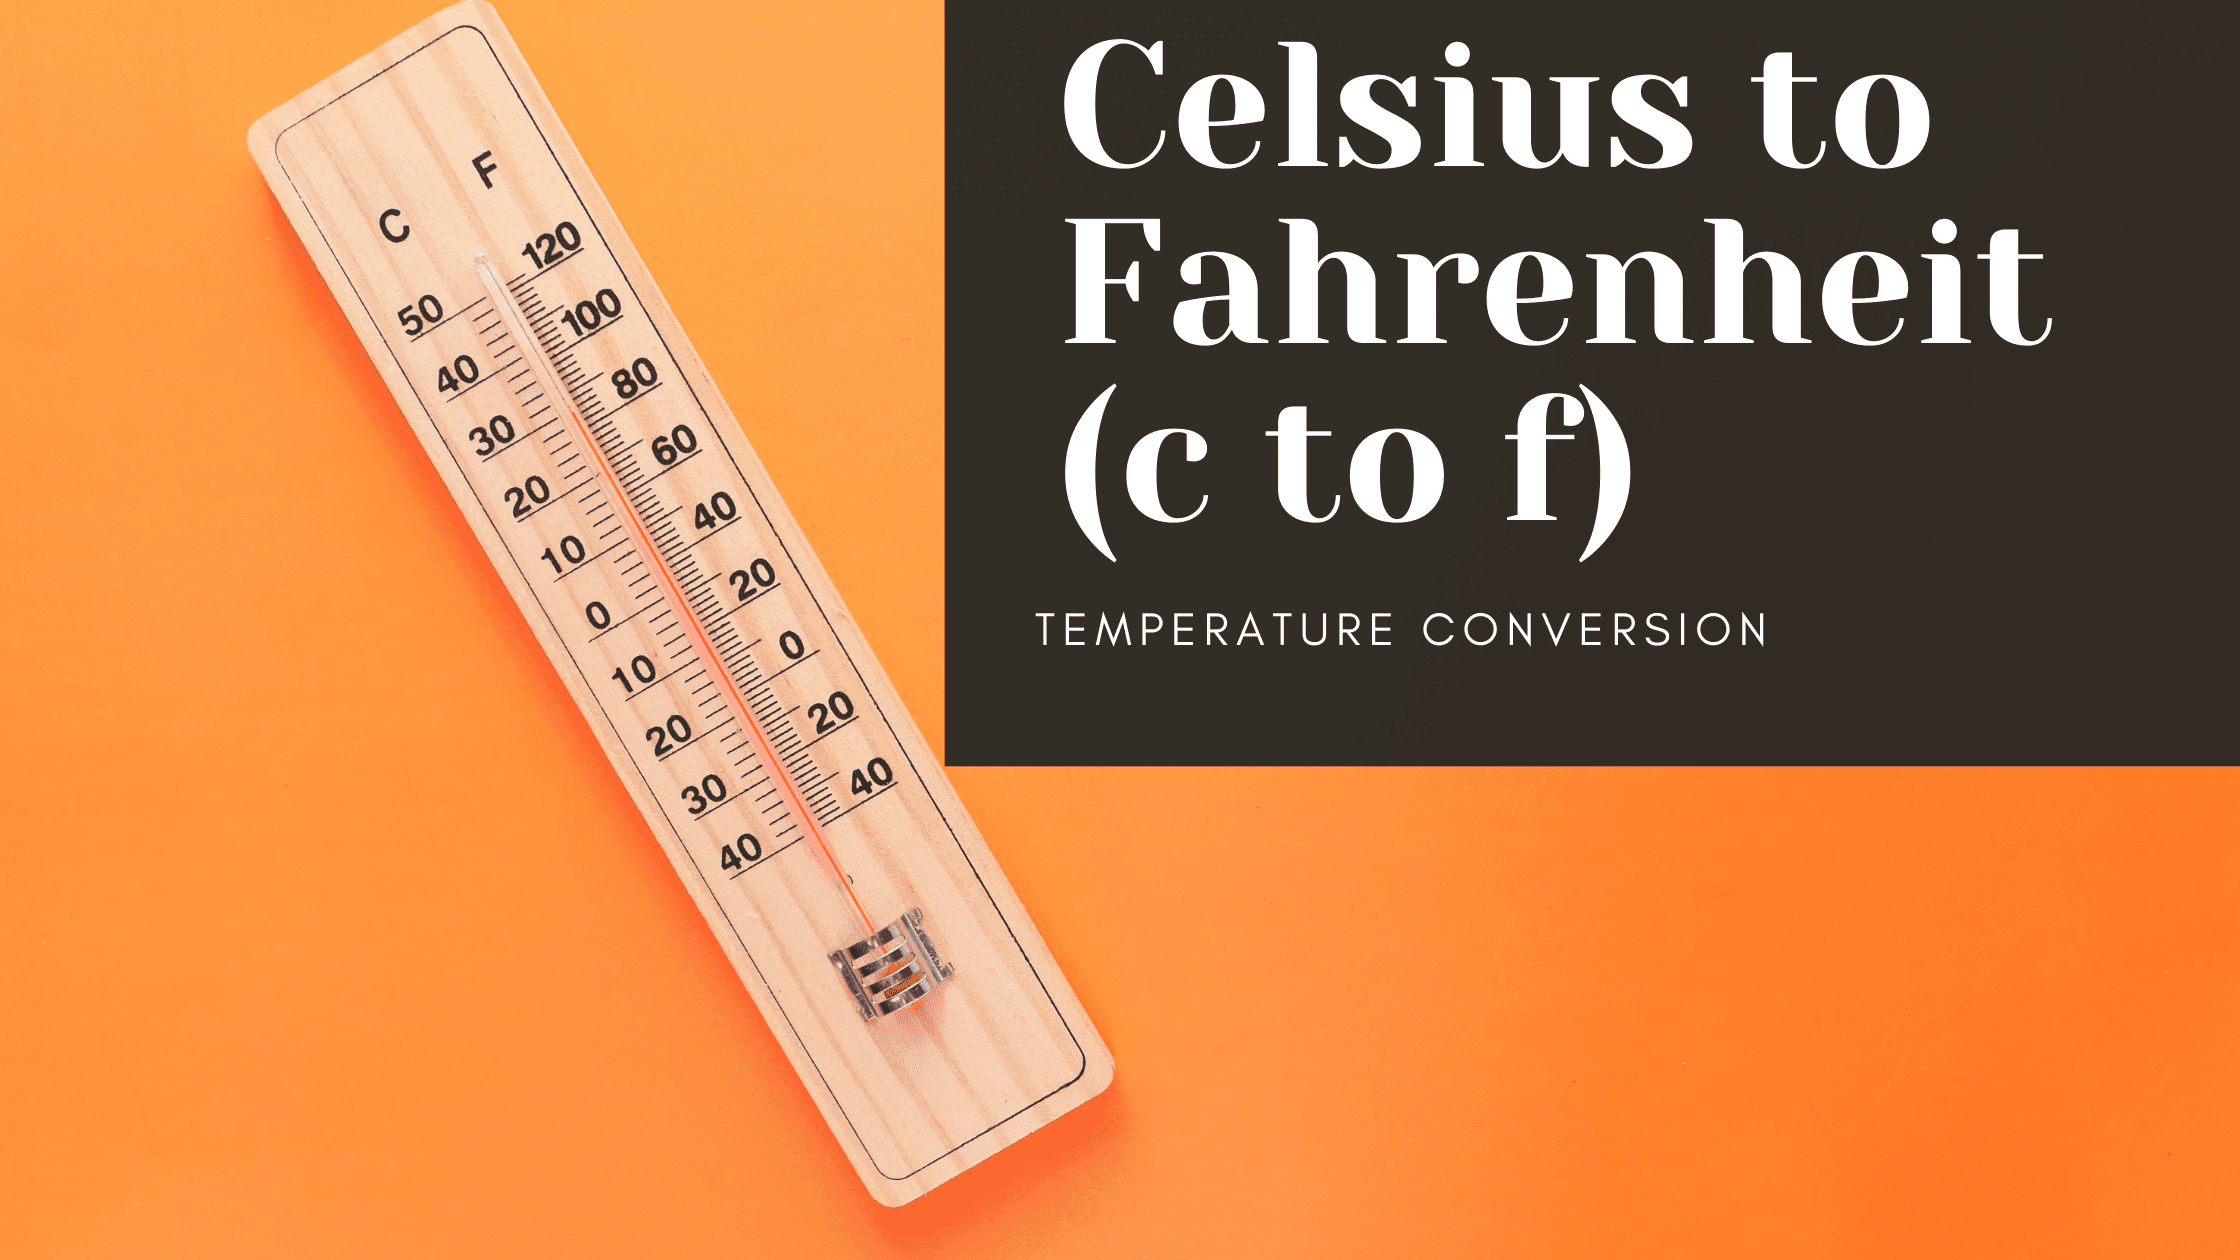 36.1 C to F Conversion Calculator (Celsius to Fahrenheit)